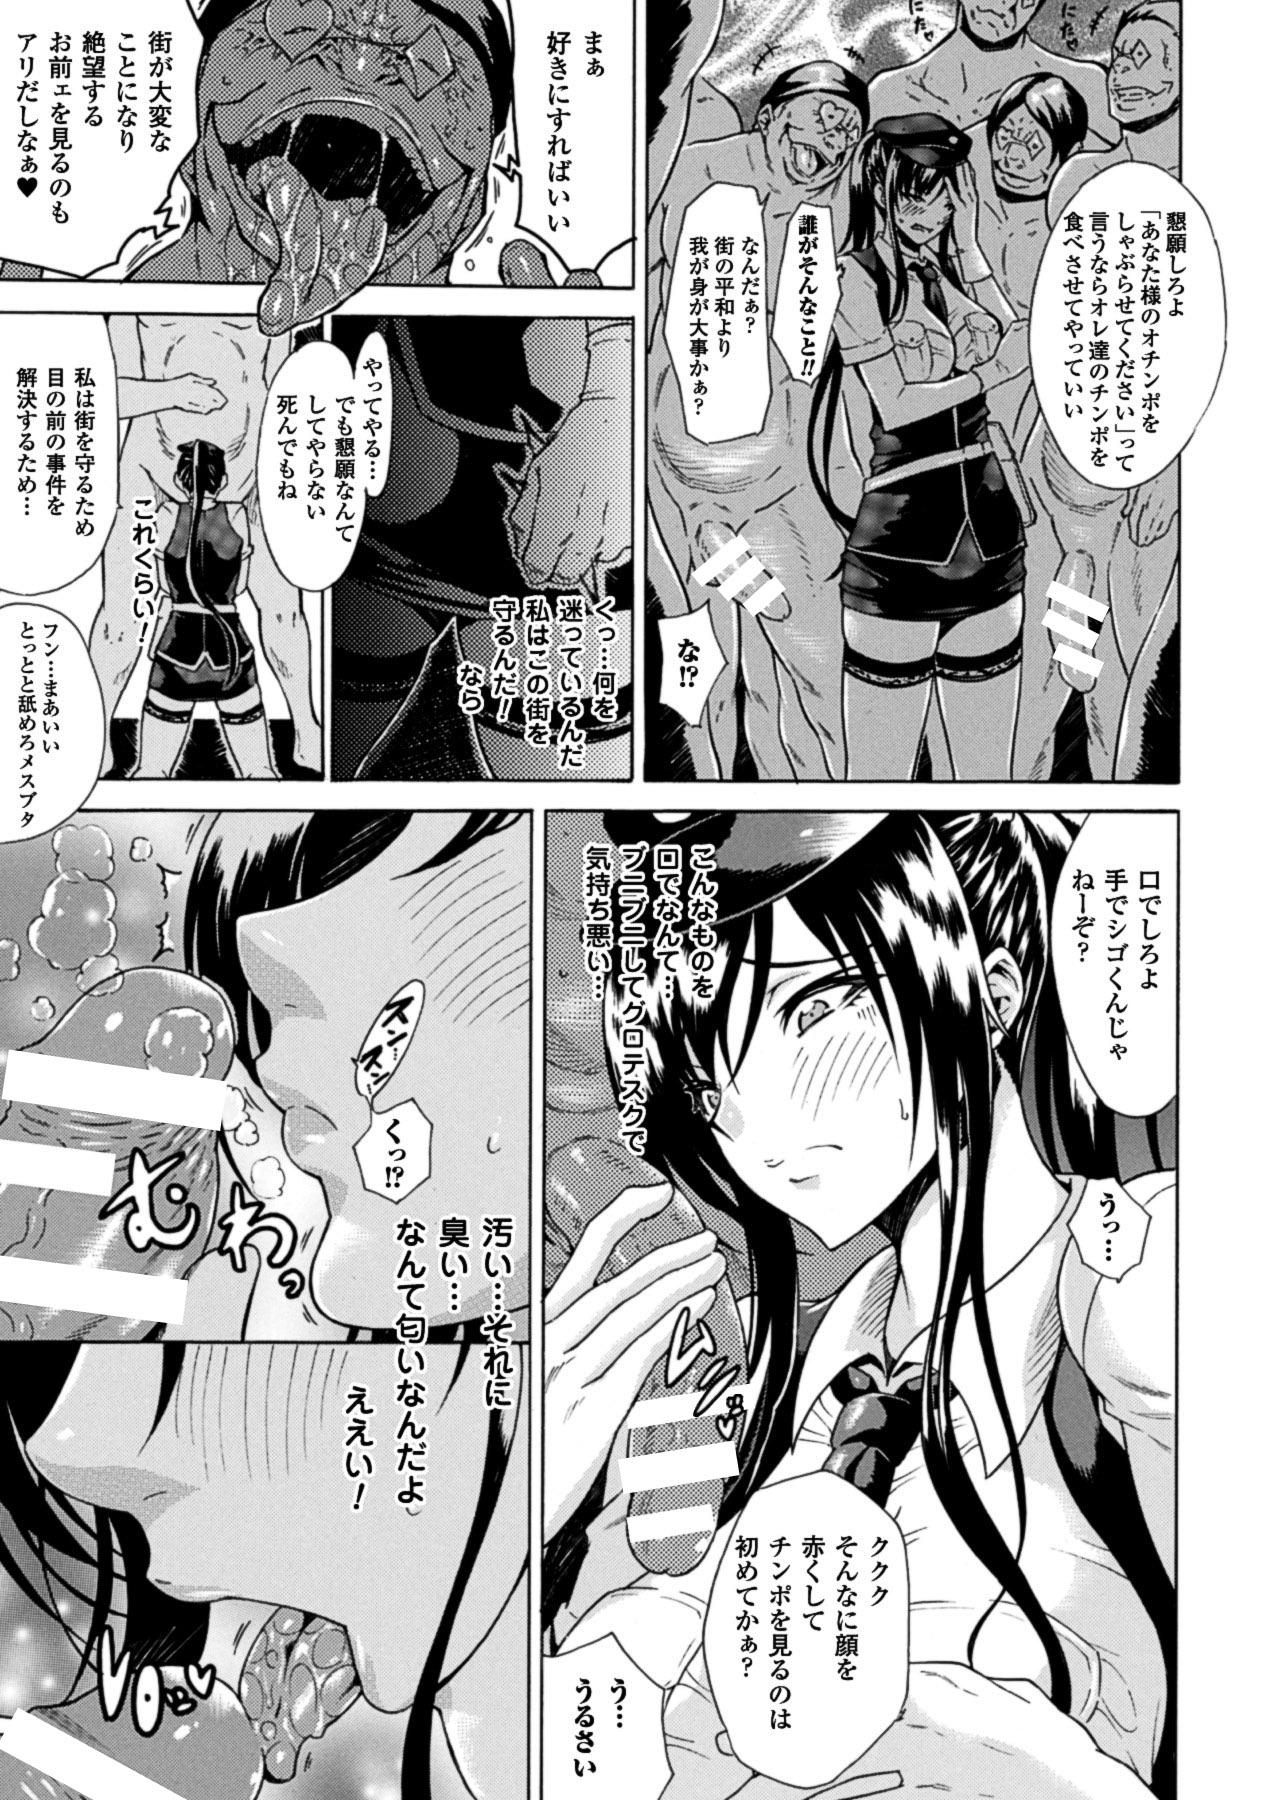 Kachiki na Onna ga Buzama na Ahegao o Sarasu made - Until Unyielding Women Exposes An Awkward Expression 28